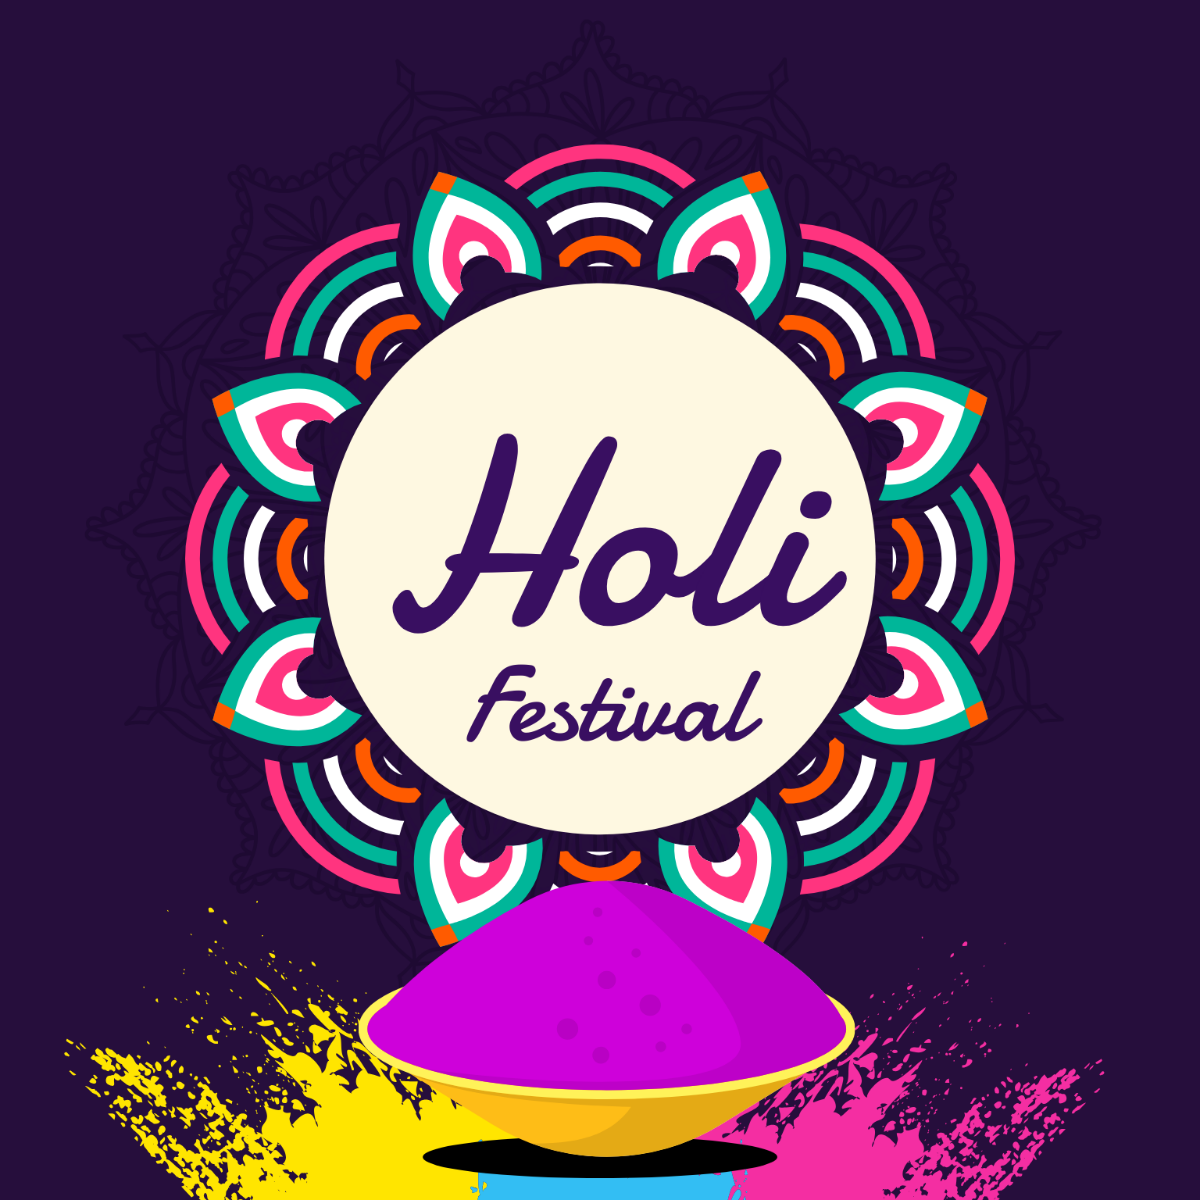 Holi Festival Design Template